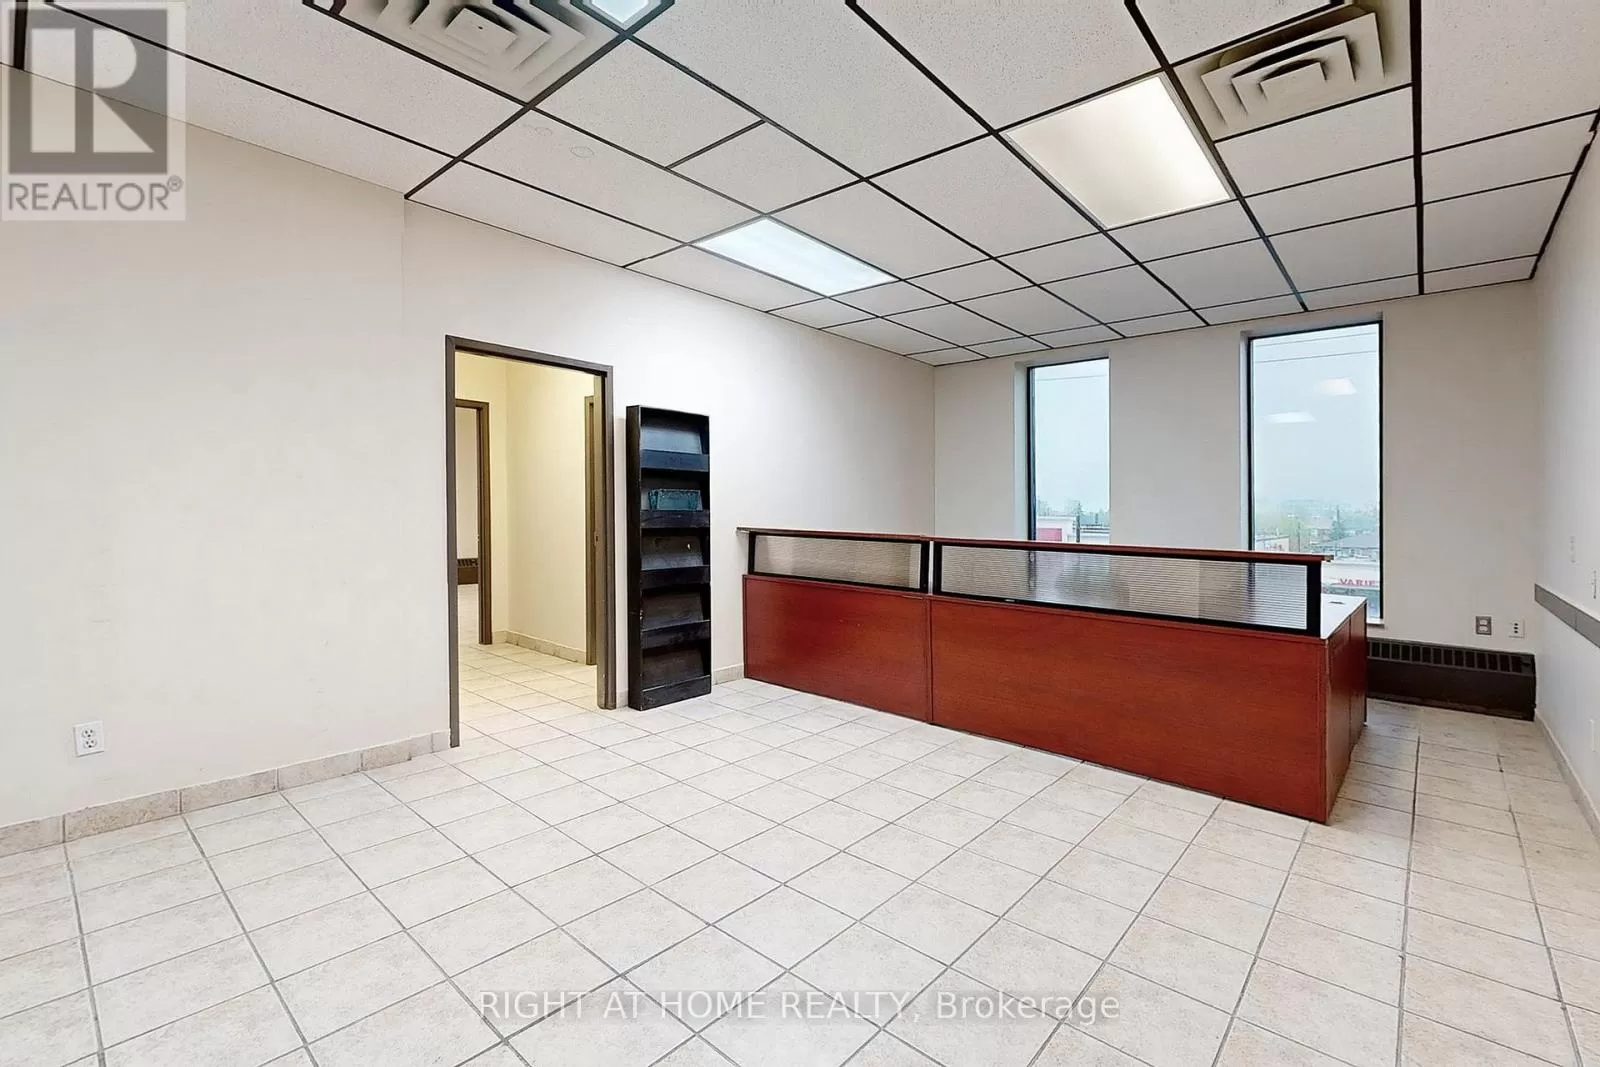 Offices for rent: 303 - 1017 Wilson Avenue, Toronto, Ontario M3K 1Z1